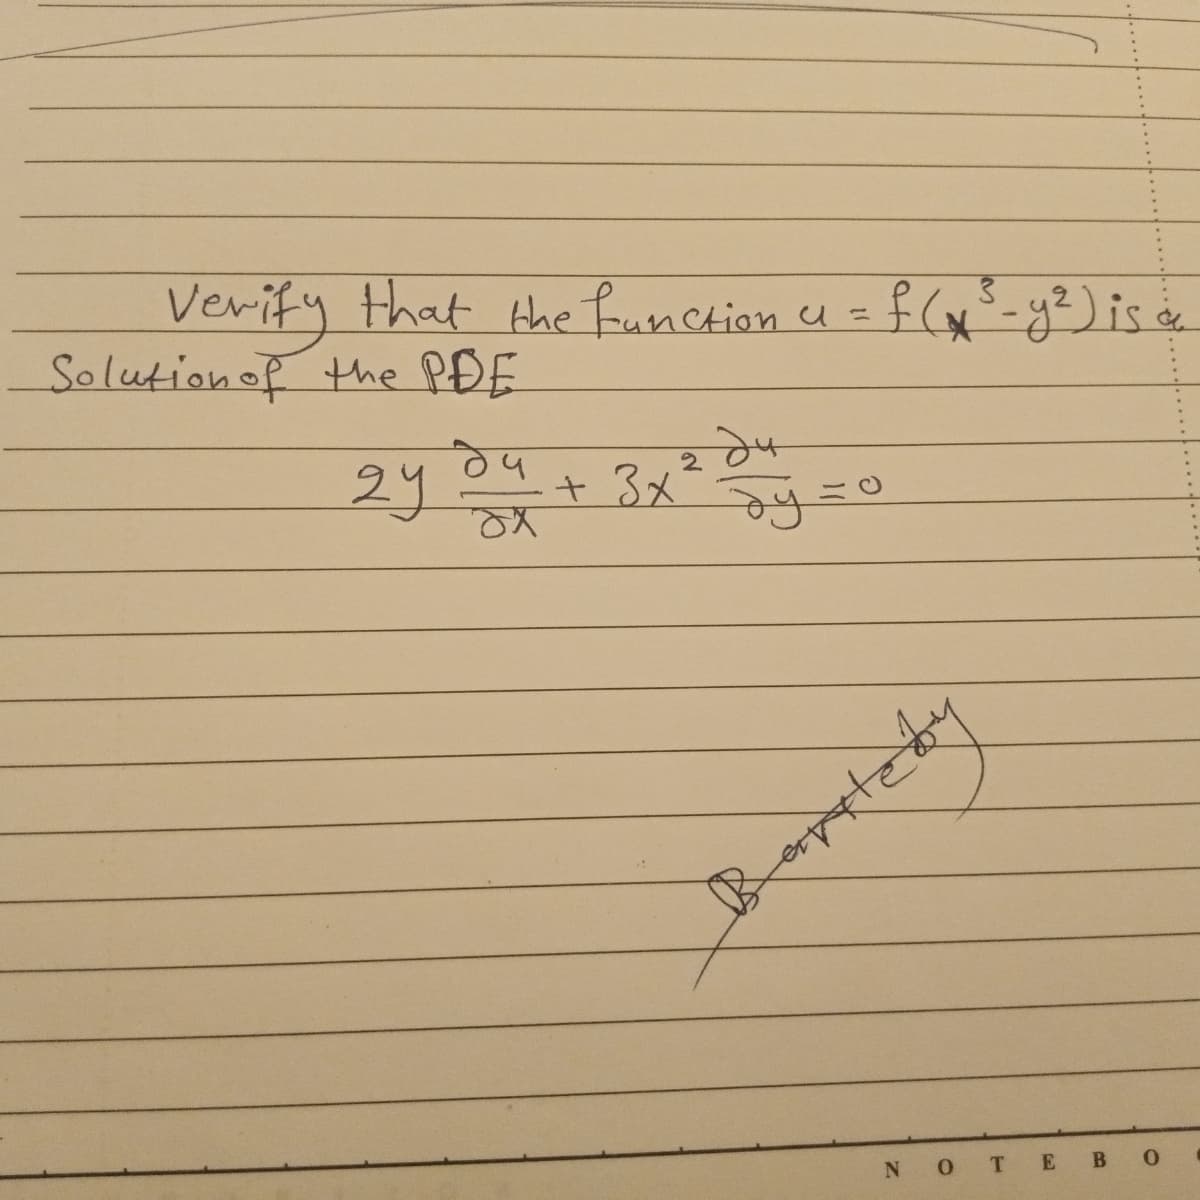 Verify that the function u = f (x²-y?) is ä
Solutionof the PDE
24
2.
+ 3x
Borstedy
0TE
B O
......... .. ... .
